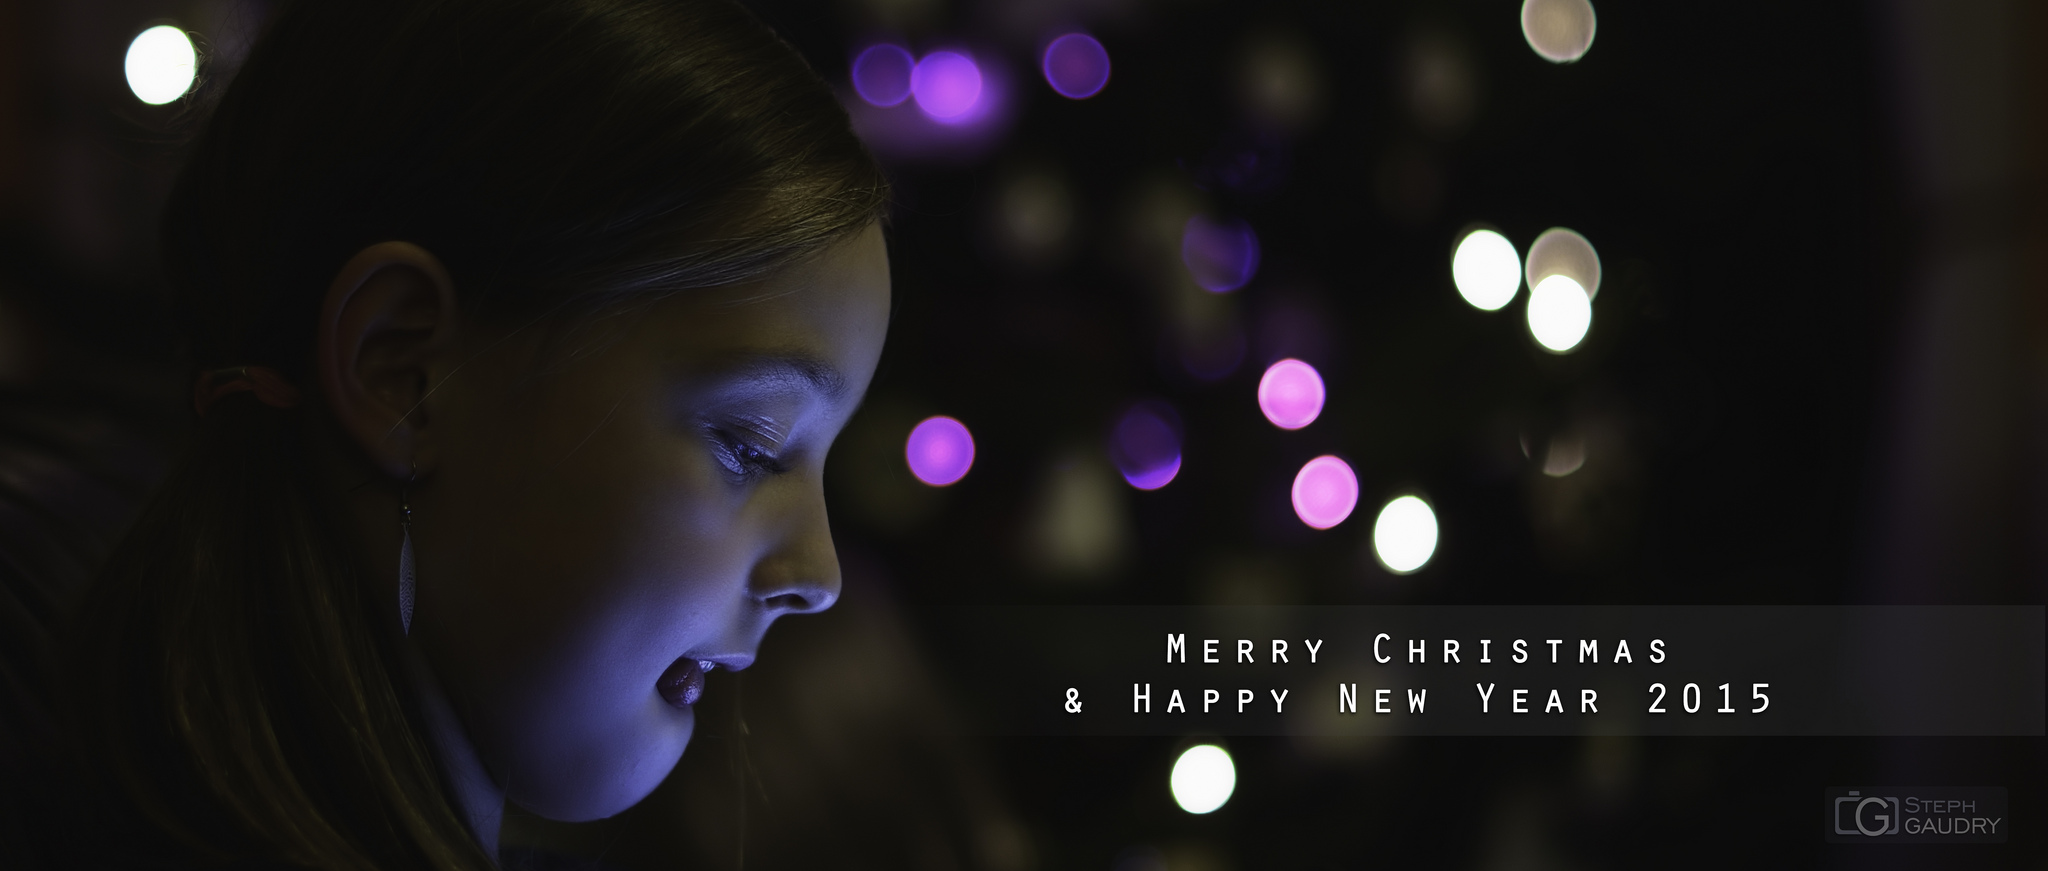 Merry Christmas and Happy New Year 2015 [Klik om de diavoorstelling te starten]